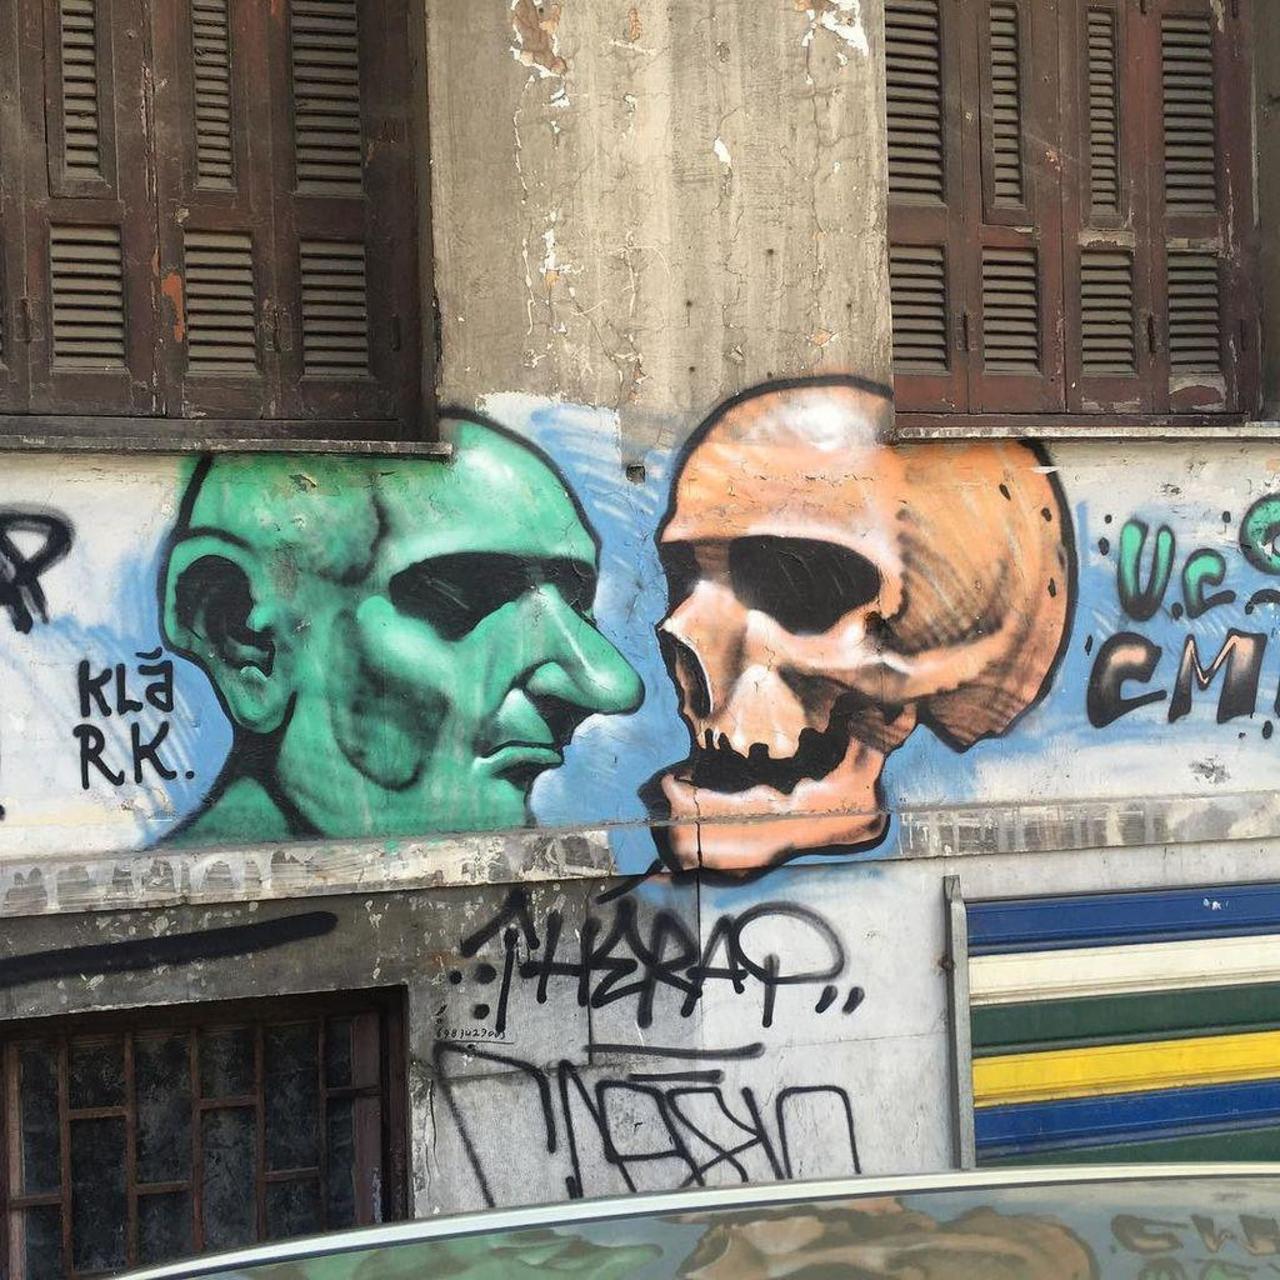 Graffiti Mural
Athens, Greece
#graff #graffiti #graffitiathens #outsider #outsiderart #street #streetart #streetart… http://t.co/6nBNi6O3CK